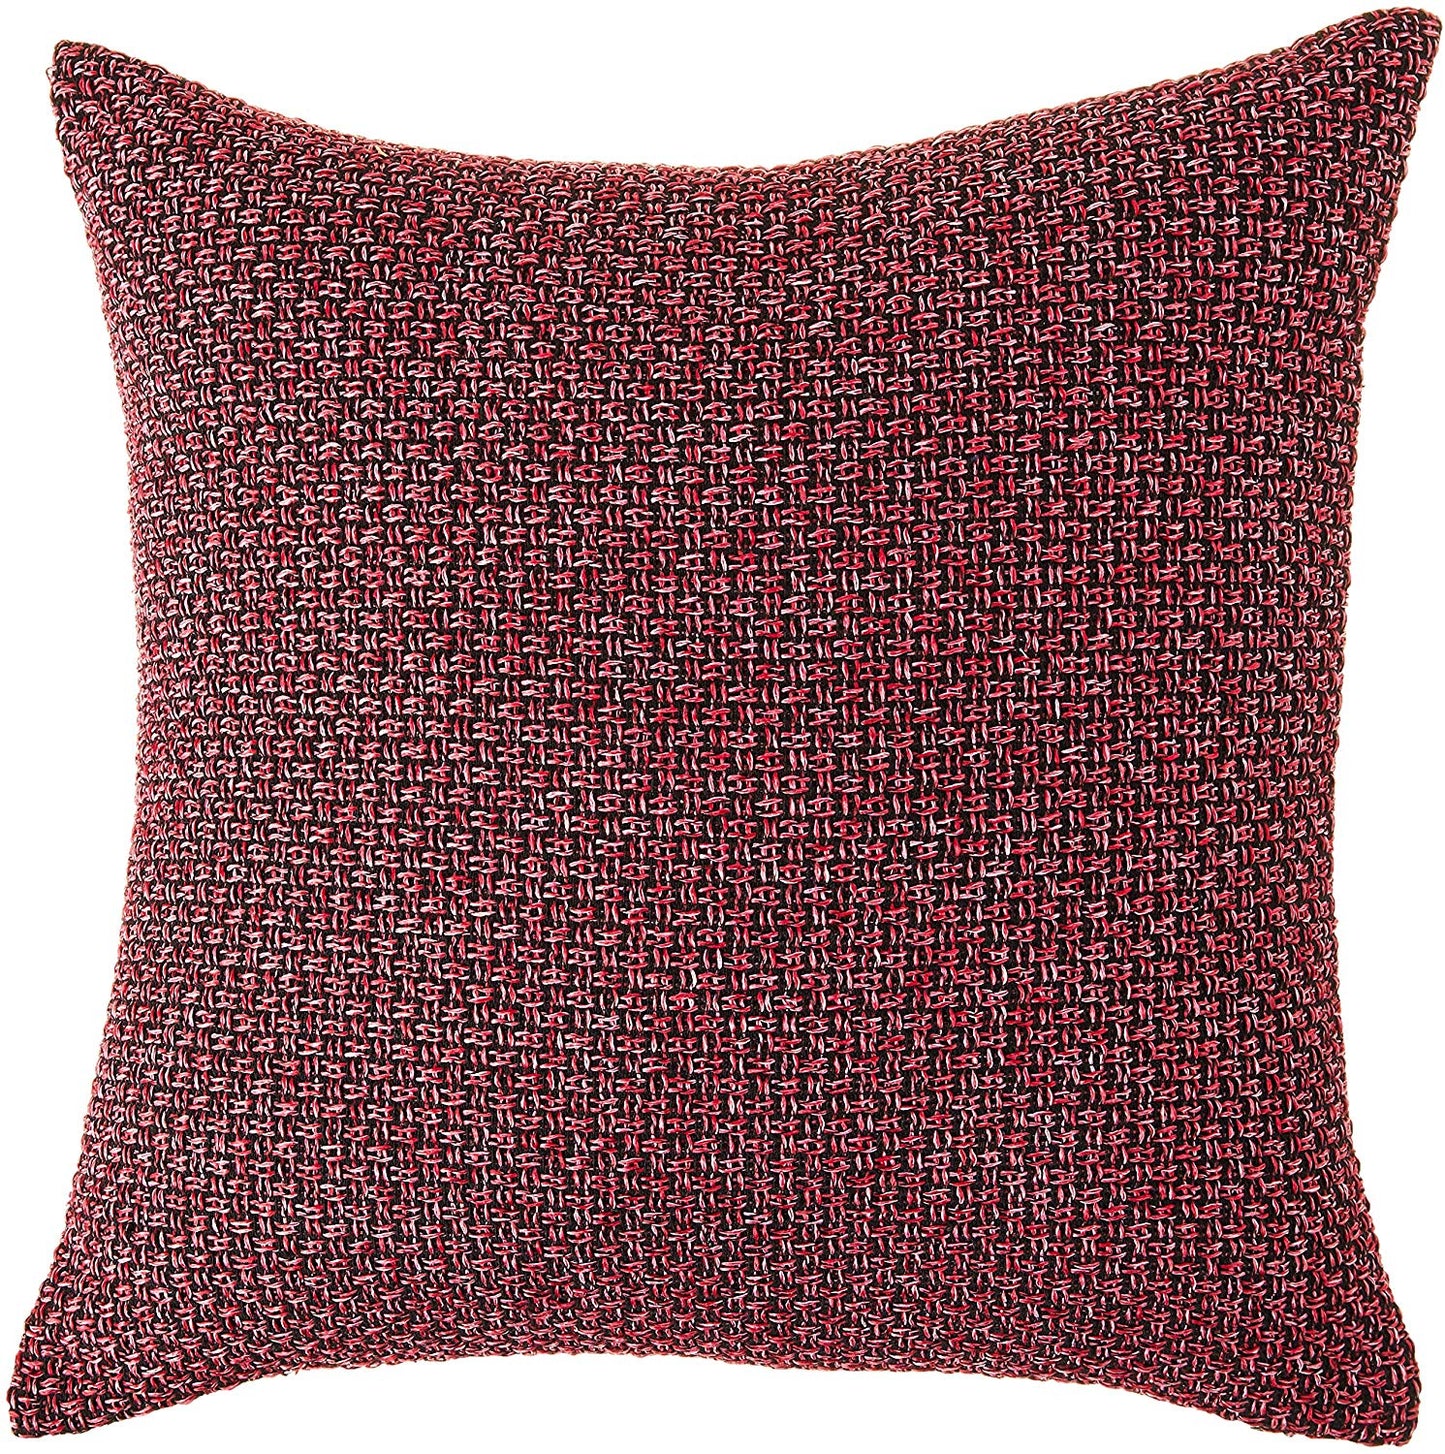 Chenille Basket Weave Design Decorative Throw Pillow Cover